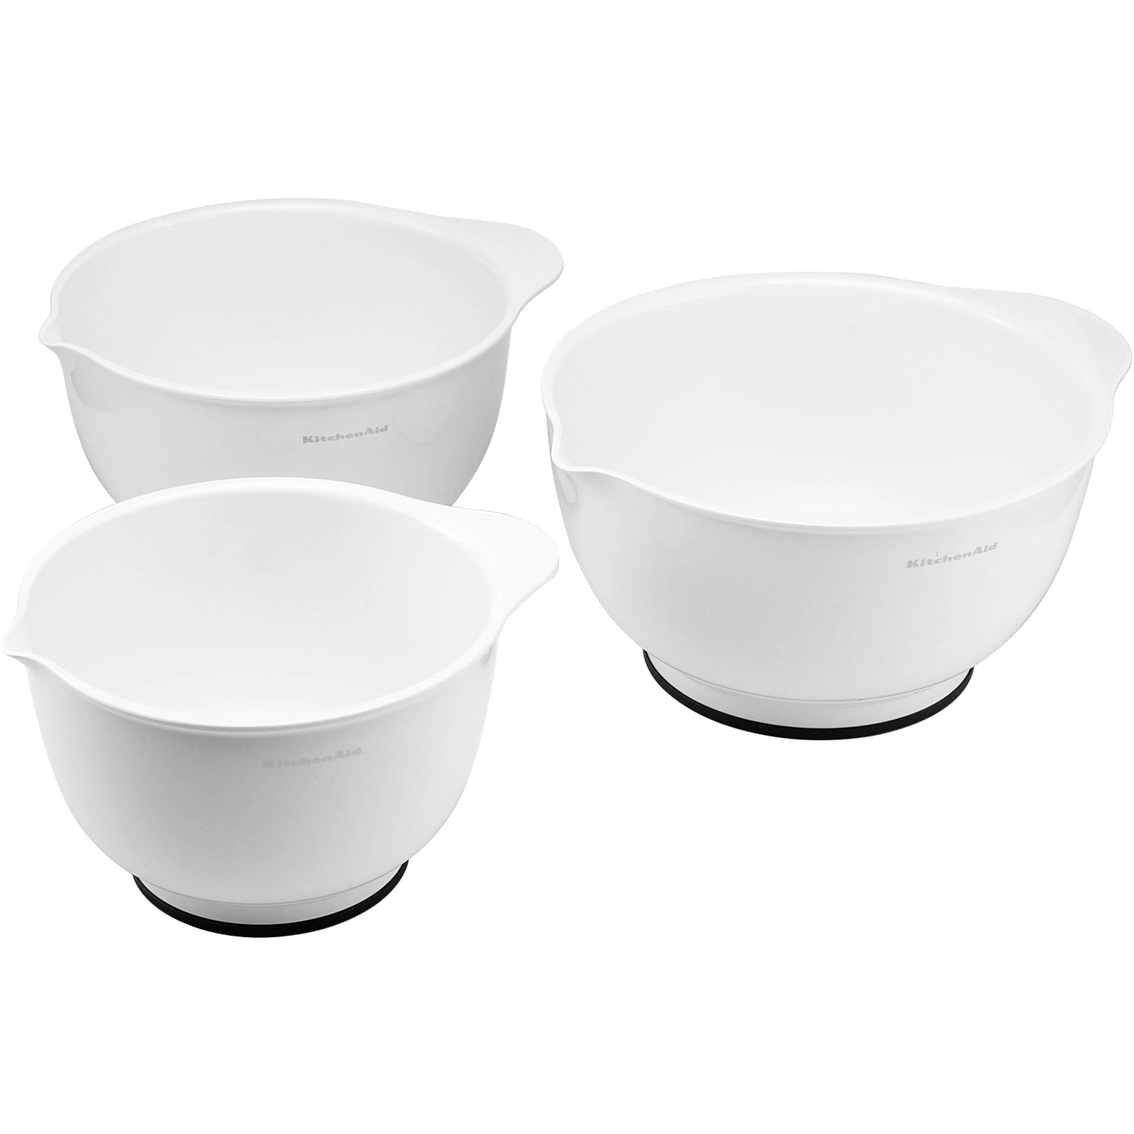 Kitchenaid 3 Pc. Mixing Bowl Set, Mixing & Measuring, Household